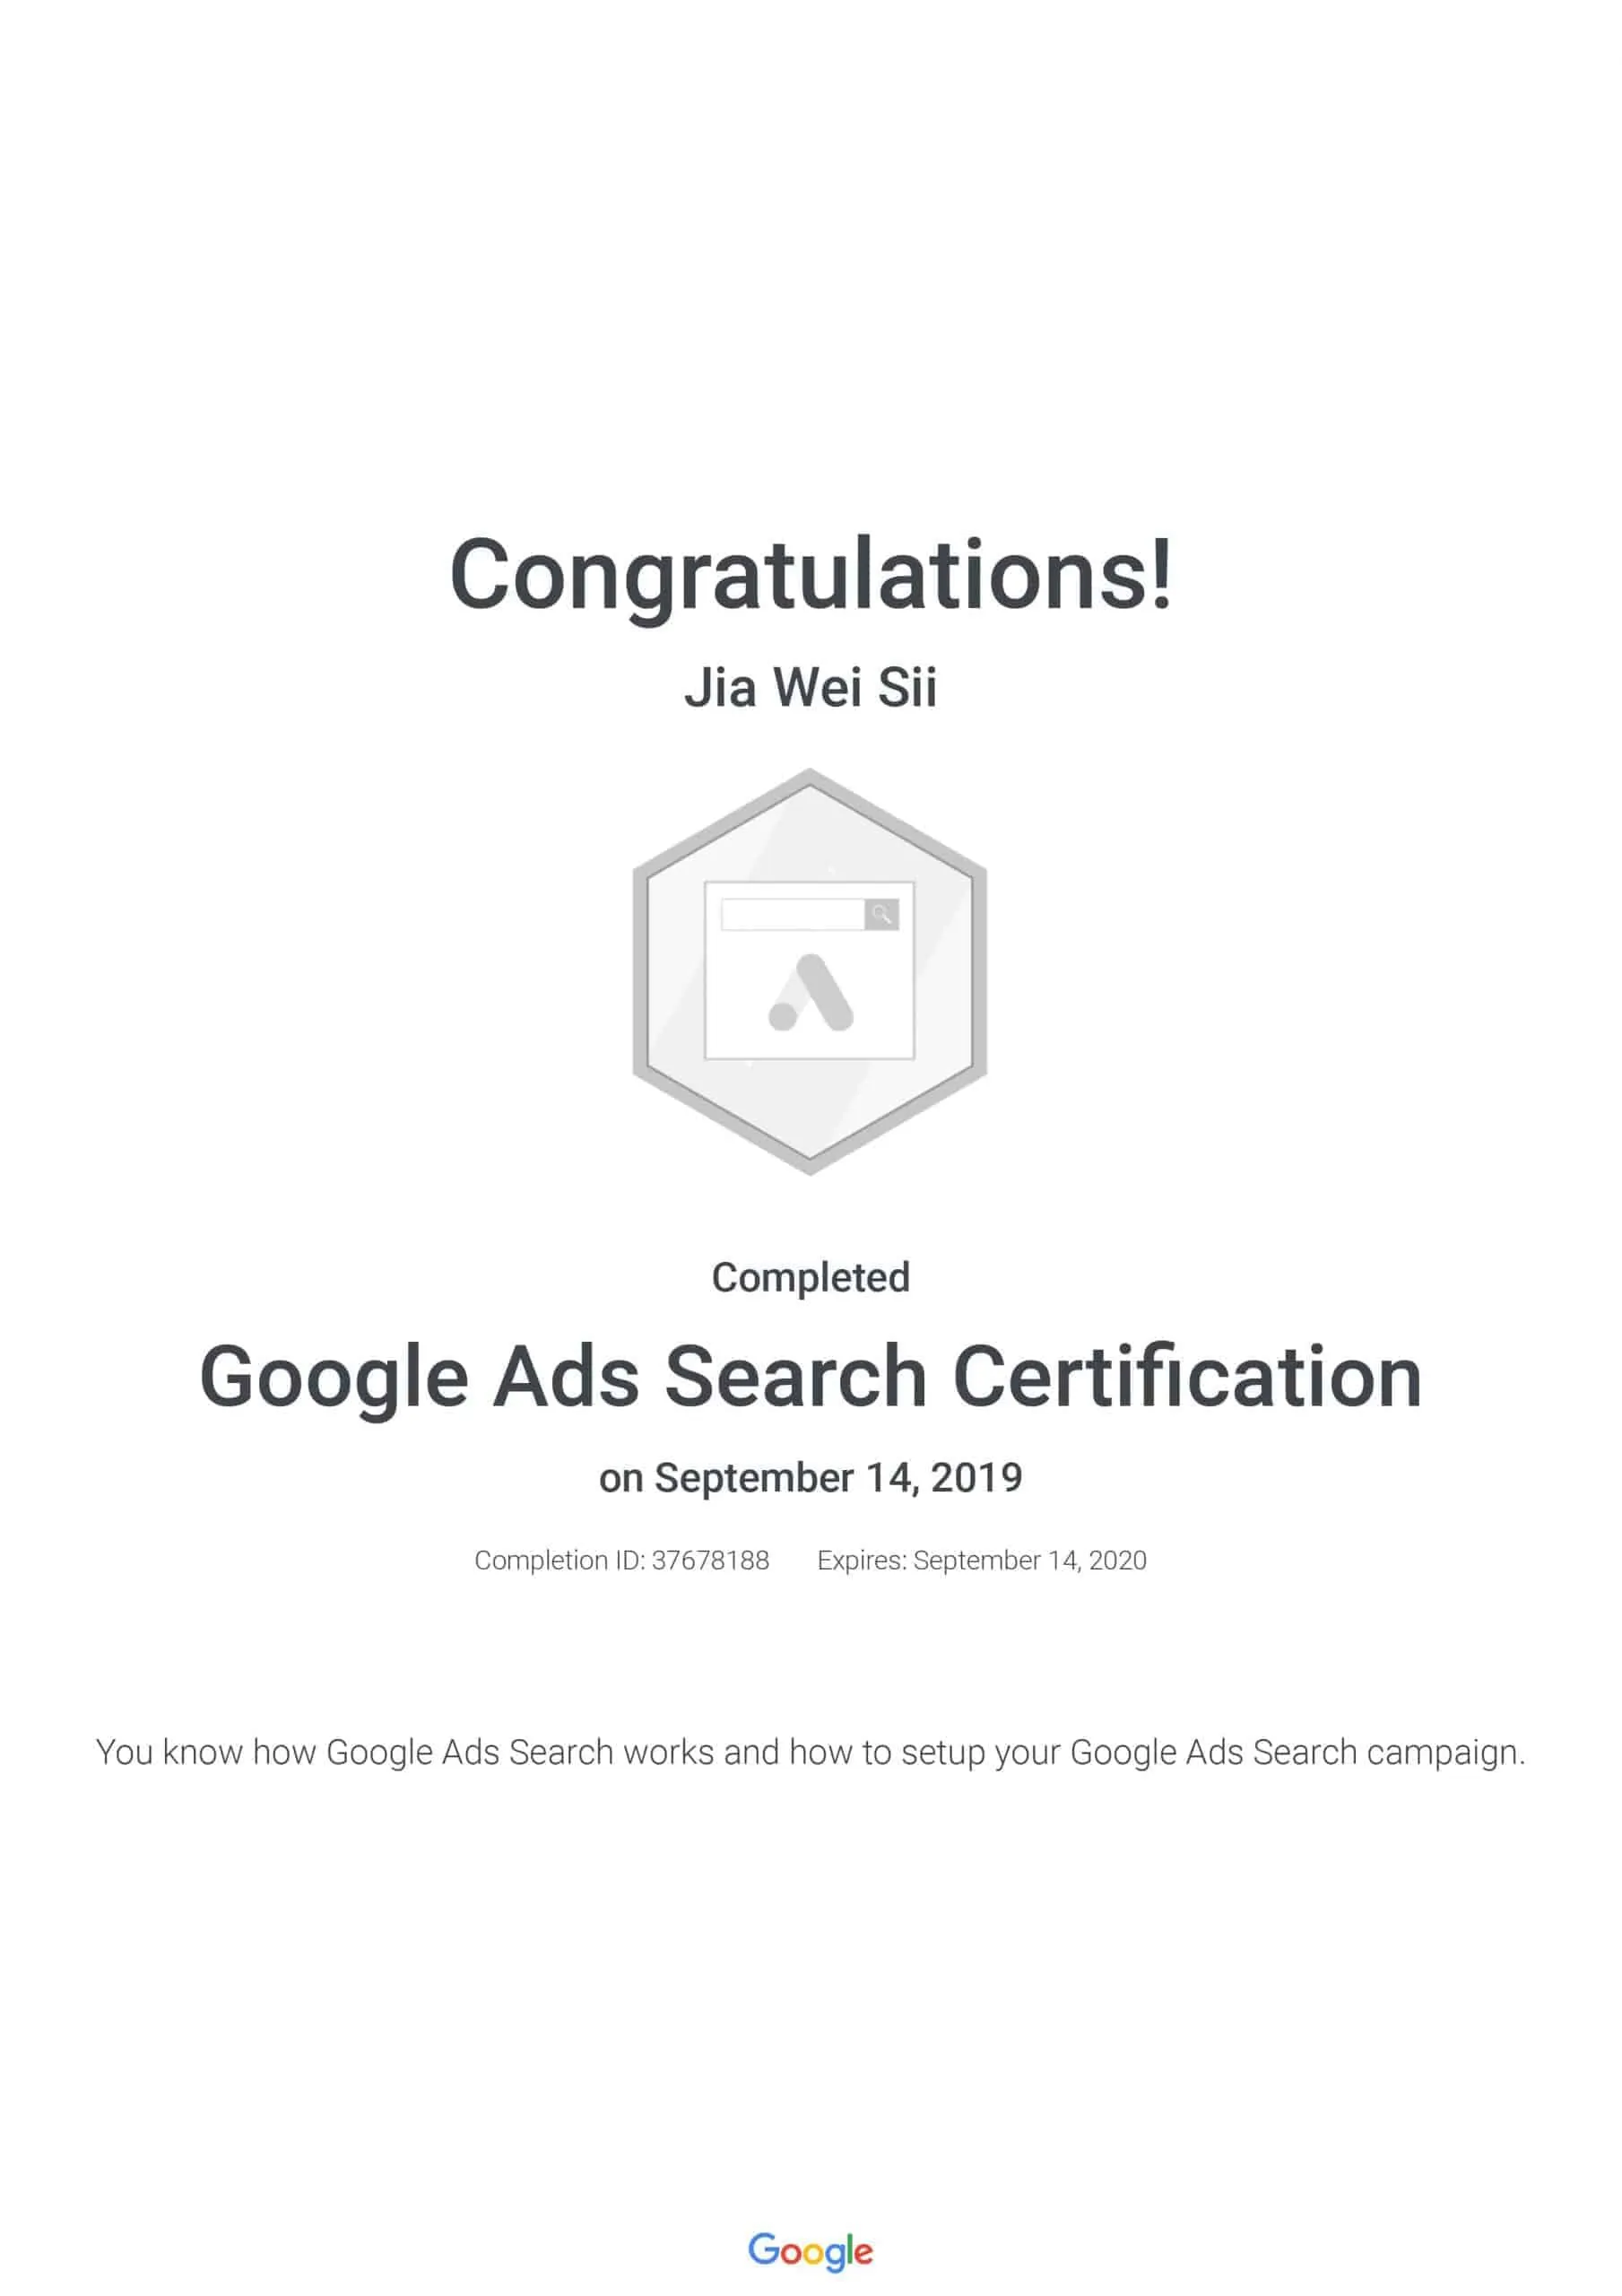 Google Ads Search Certification - Jia Wei